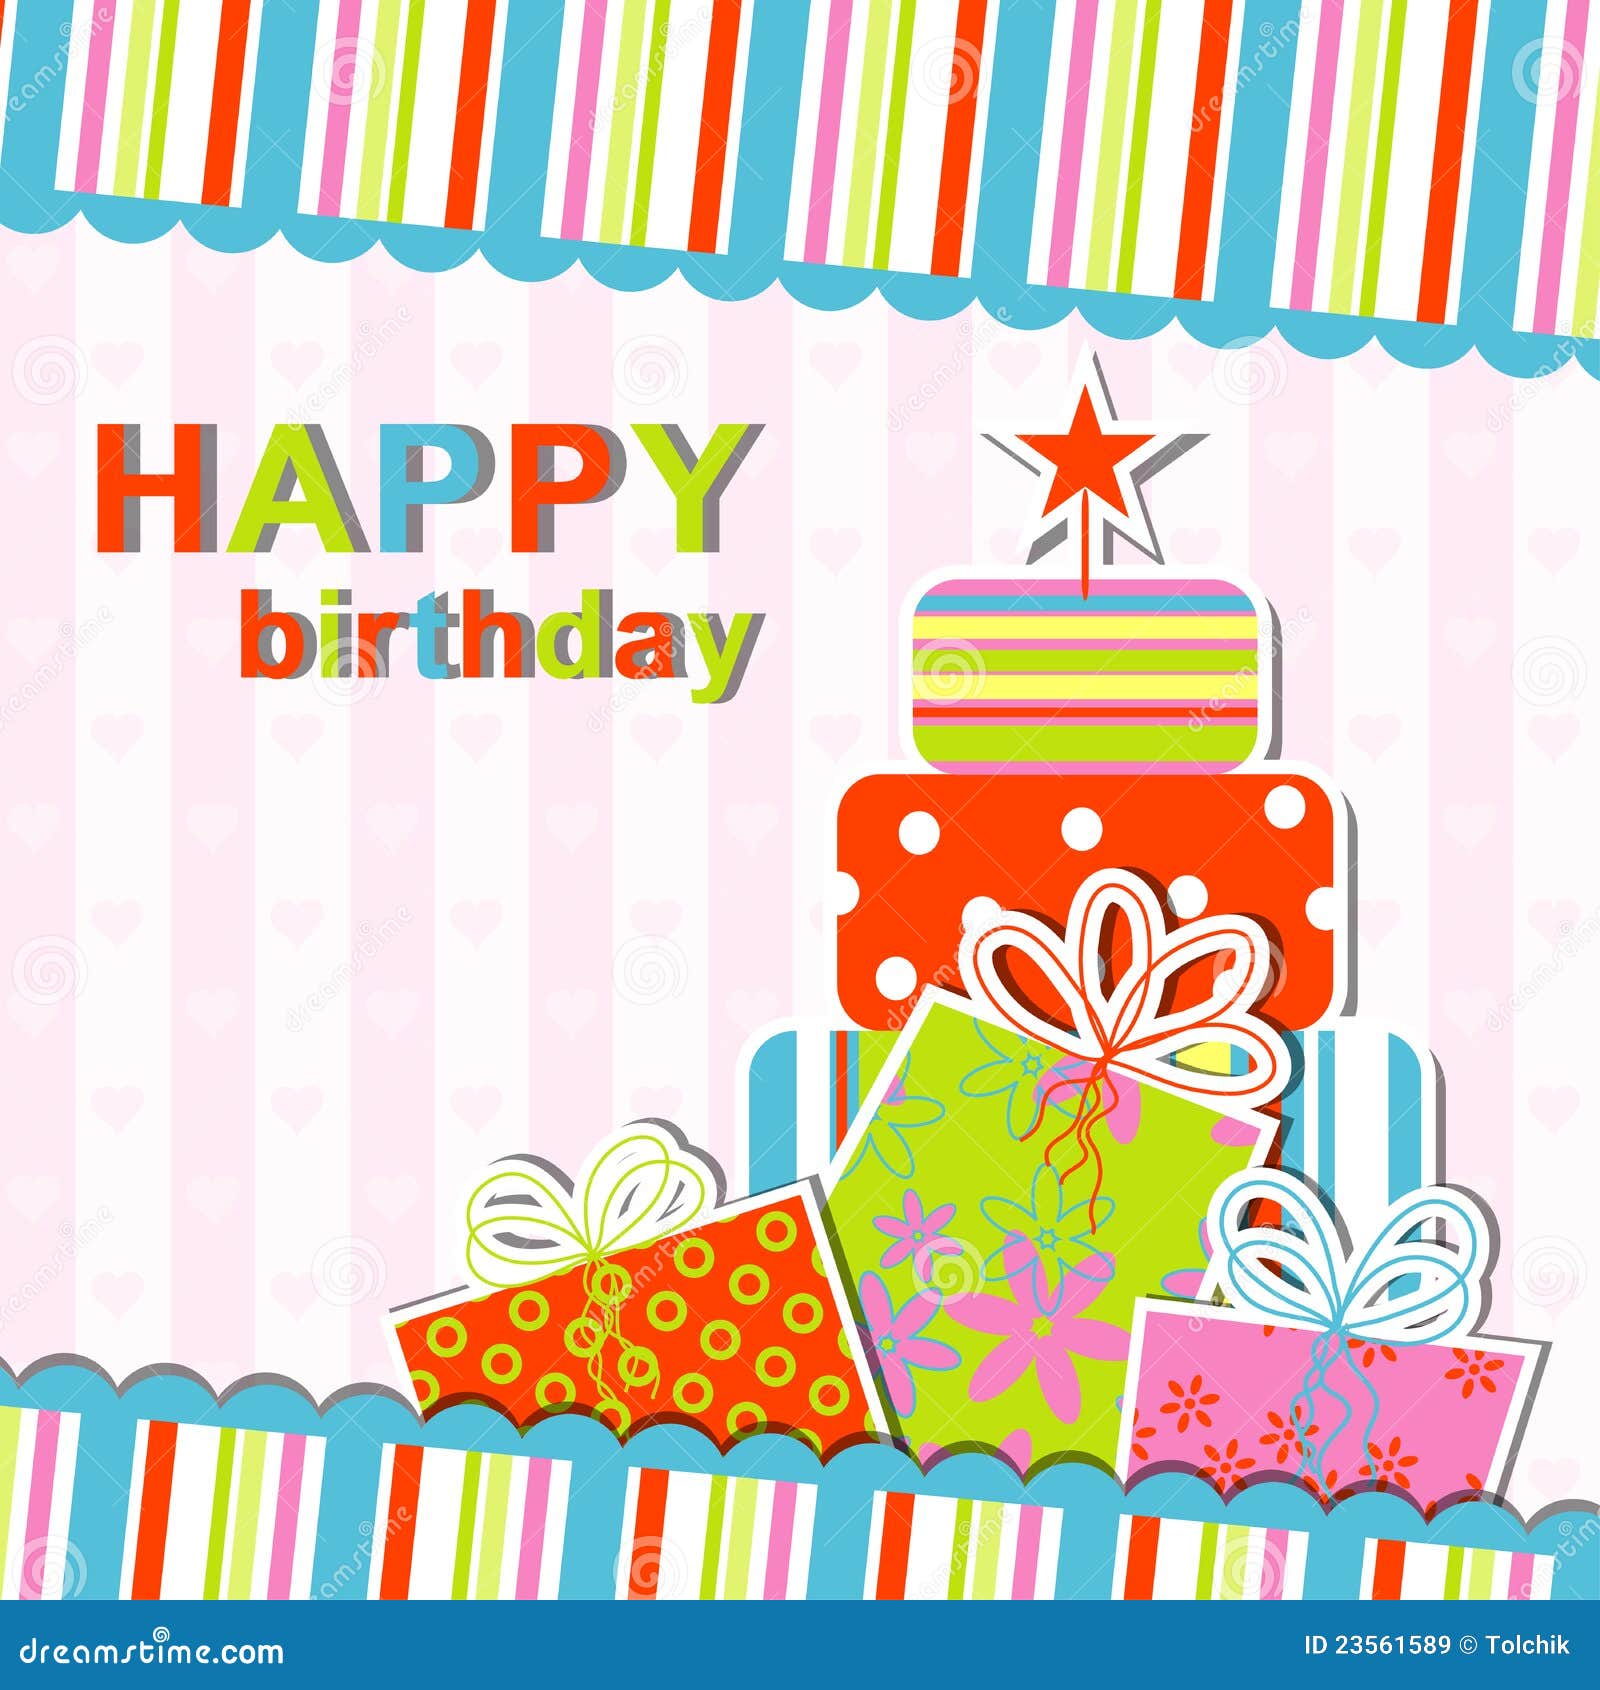 template-birthday-greeting-card-23561589.jpg